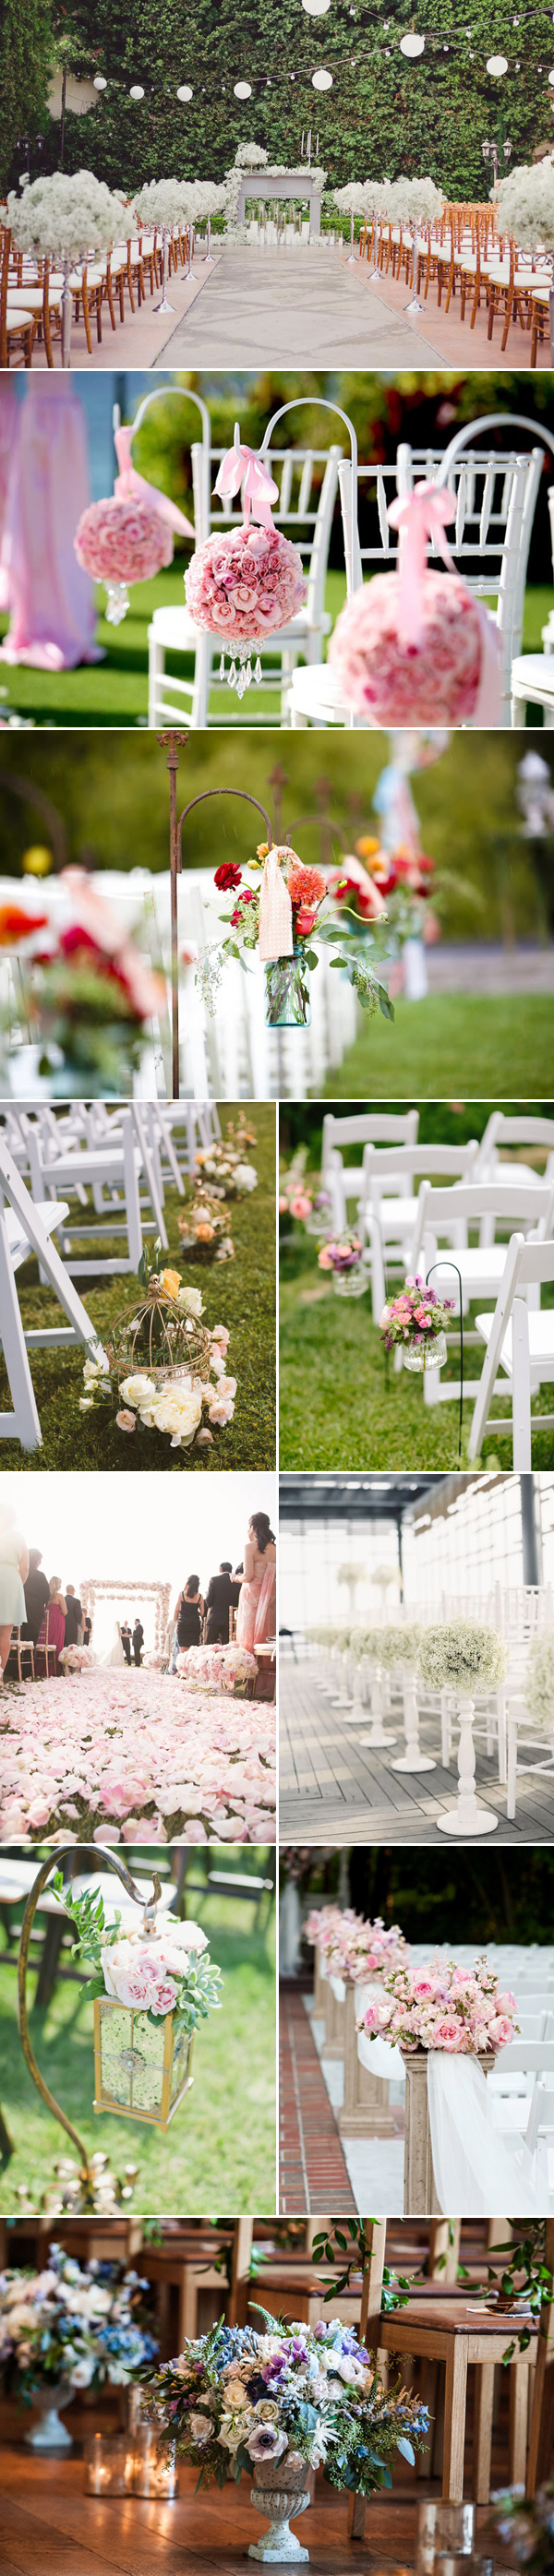 Pedestal Flower Arrangements wedding decor ideas